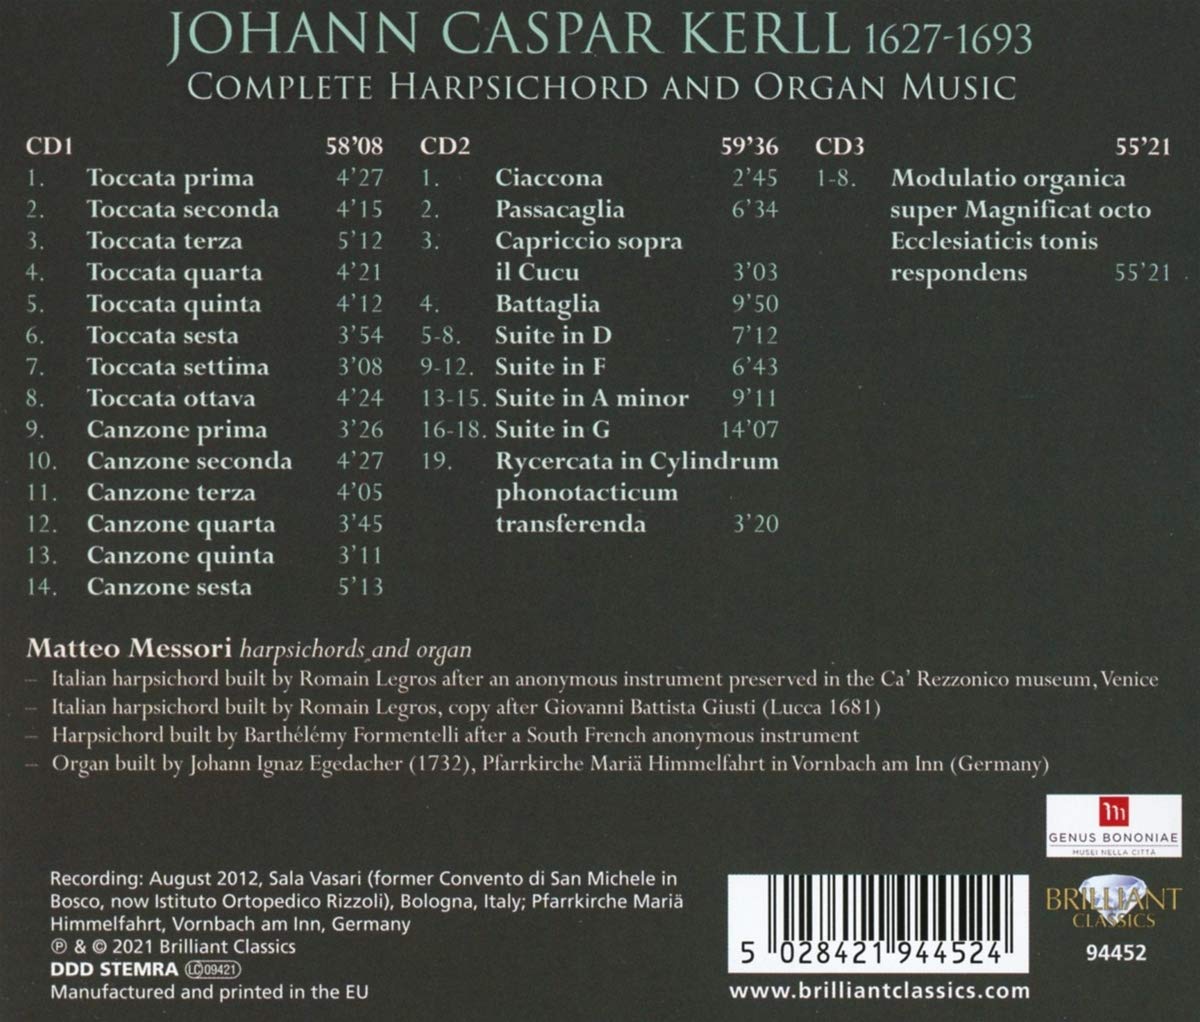 Matteo Messori 요한 카스파르 케를: 하프시코드와 오르간 작품 전곡 (Johann Caspar Kerll: Complete Keyboard Music) 